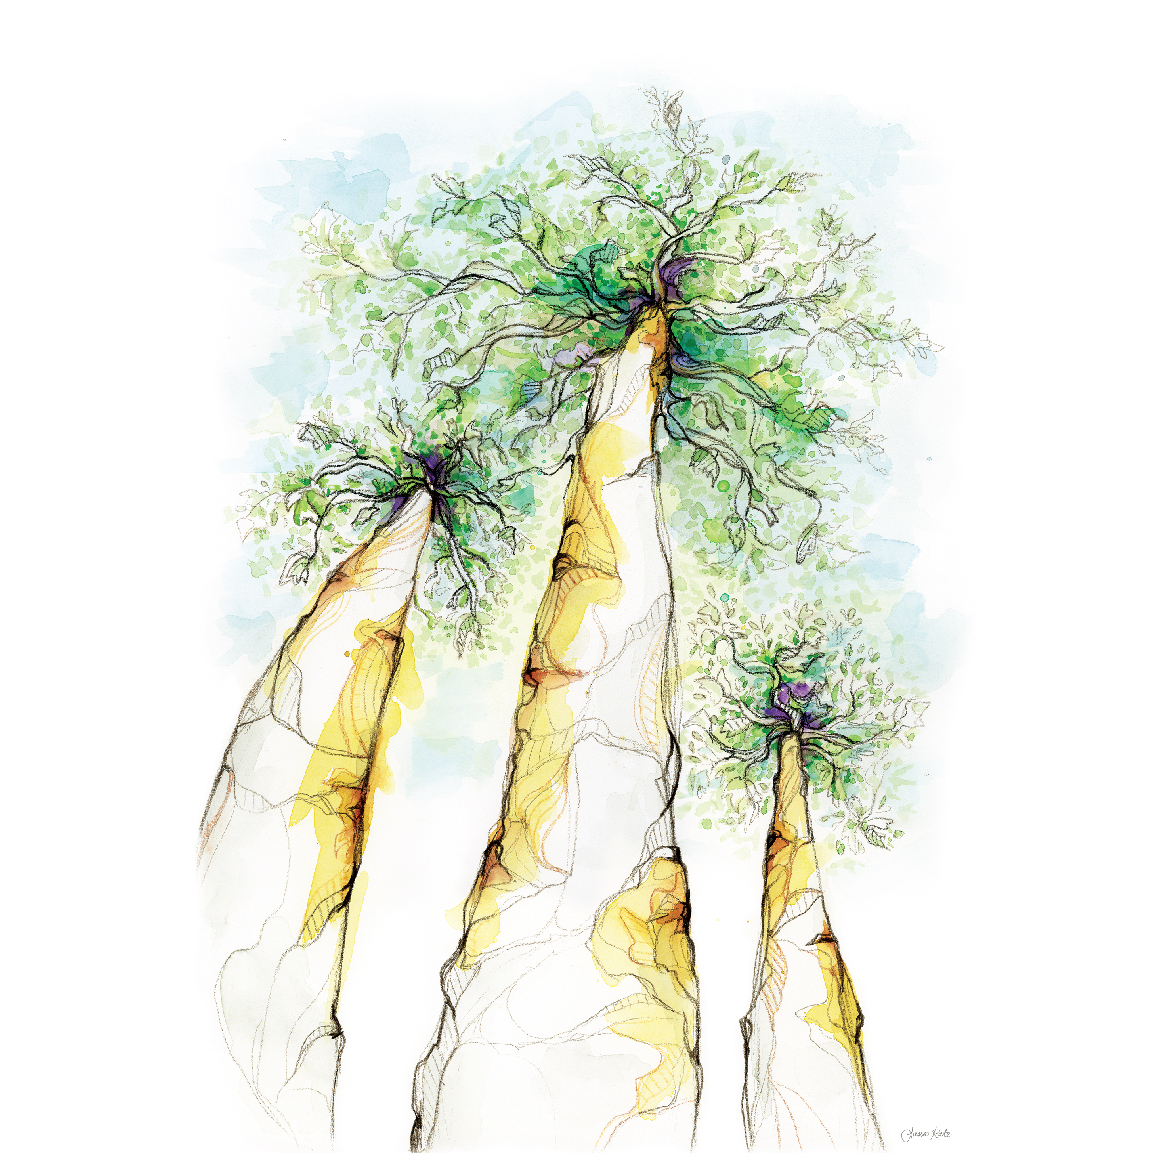 Aspen Tree Sketch at Explore collection of Aspen